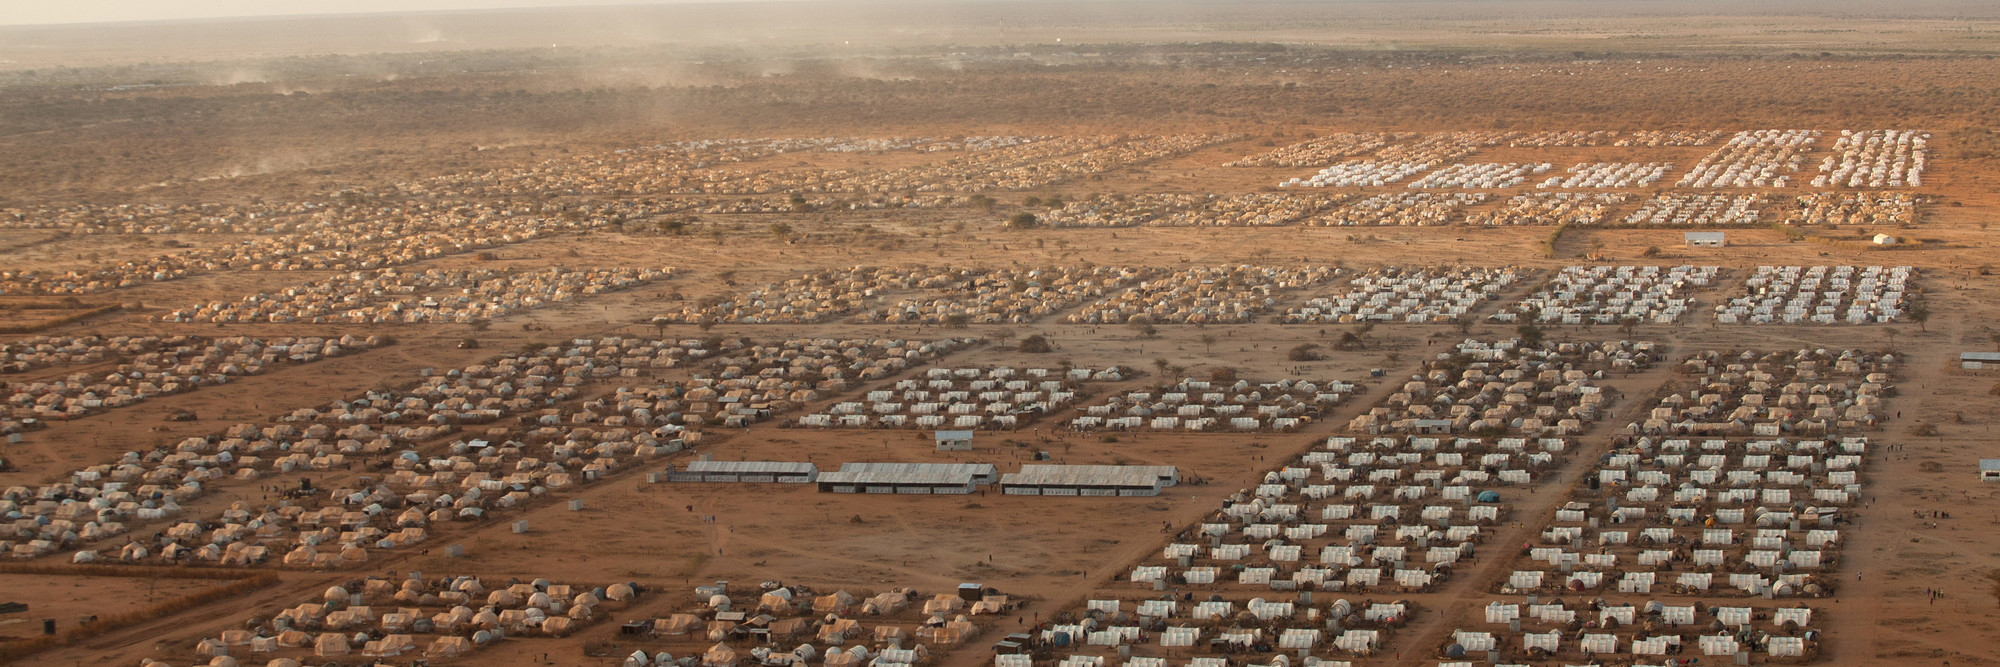 Brendan Bannon. Ifo 2, Dadaab Refugee Camp. 2011. Courtesy of Brendan Bannon